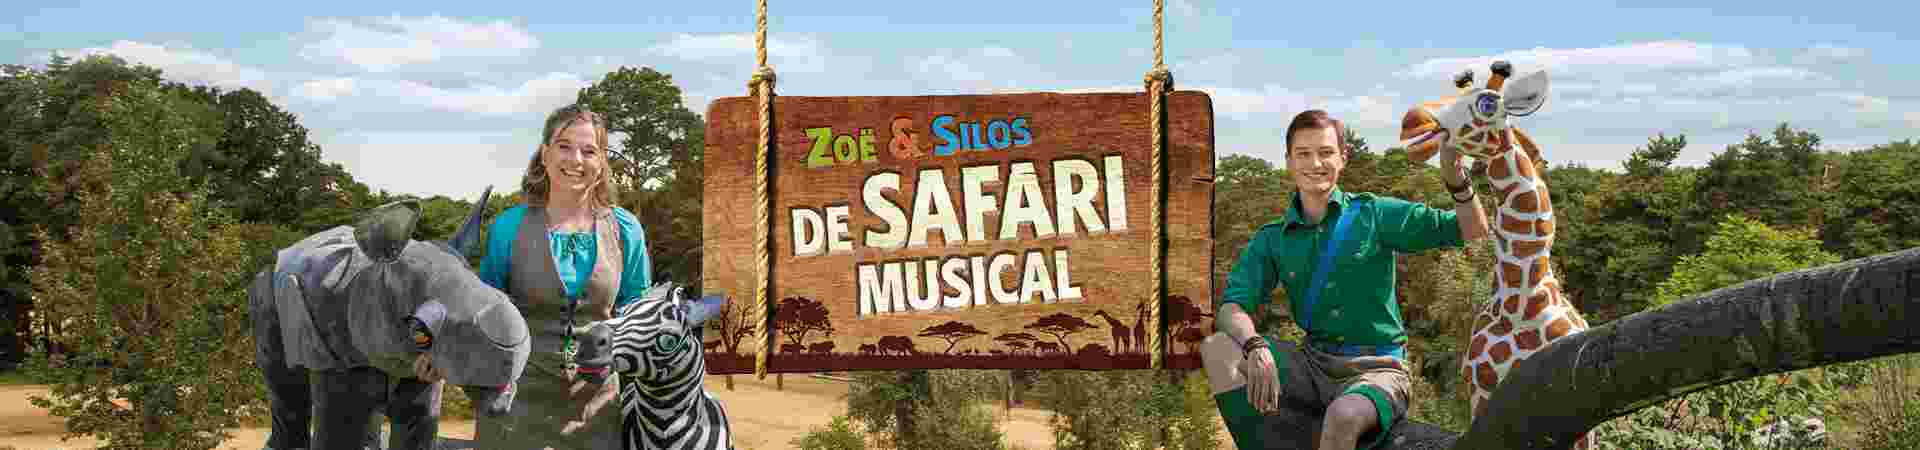 Zoë & Silos - Safari musical